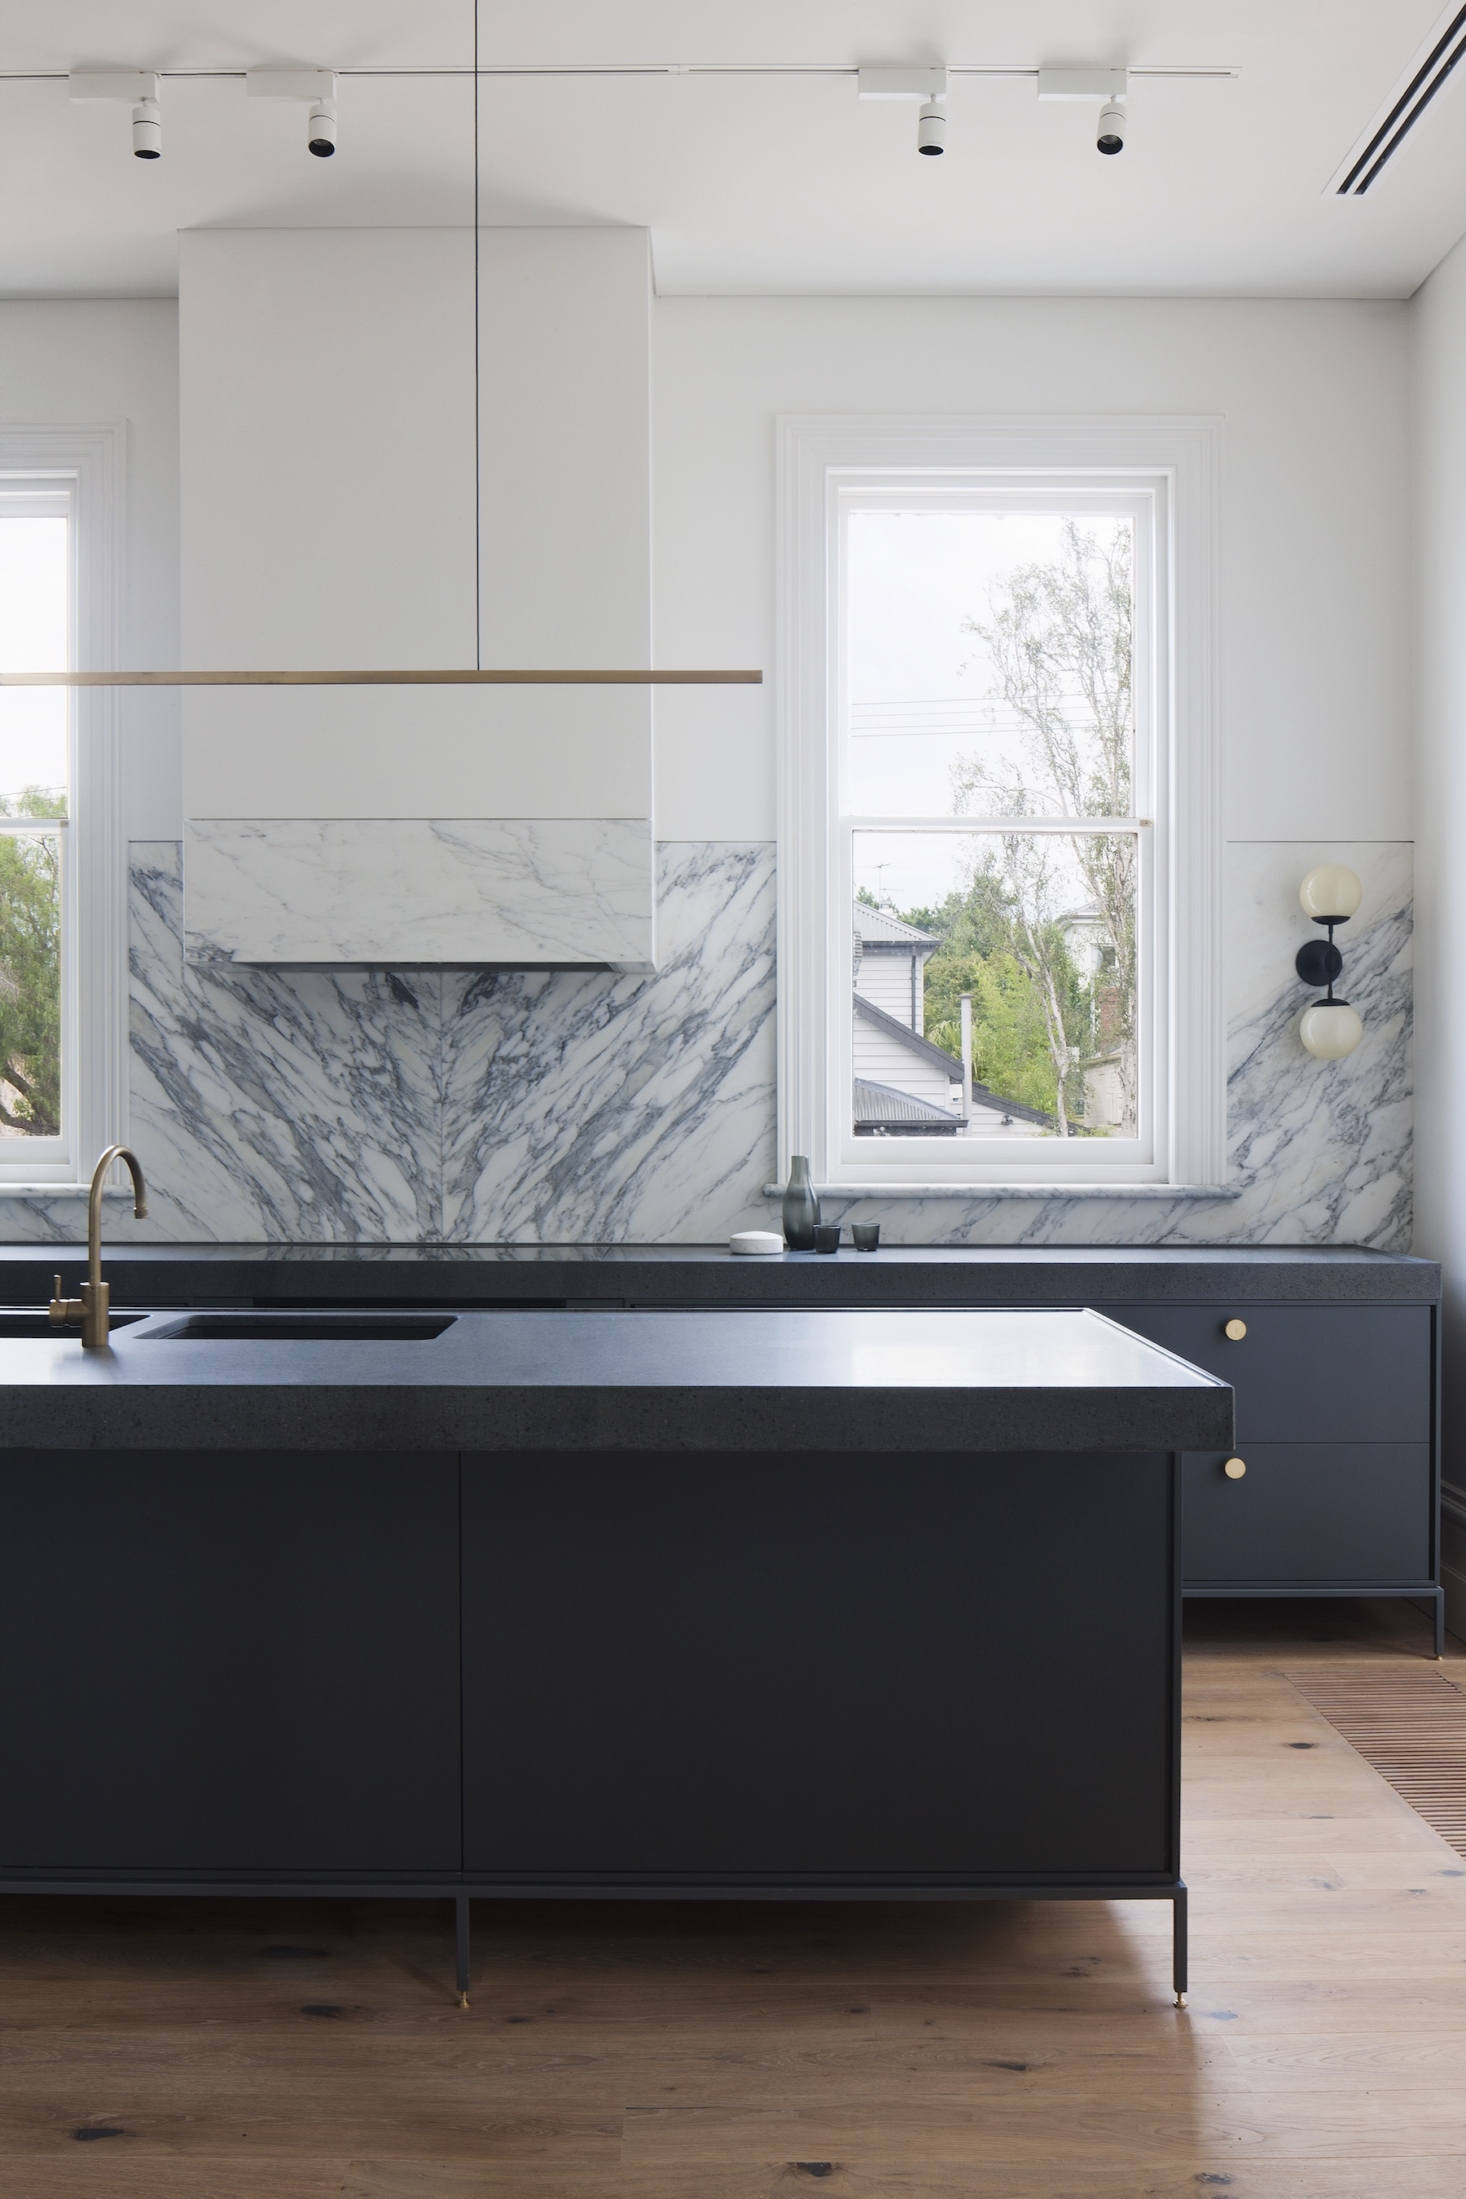 Cool kitchen splashback made of marble